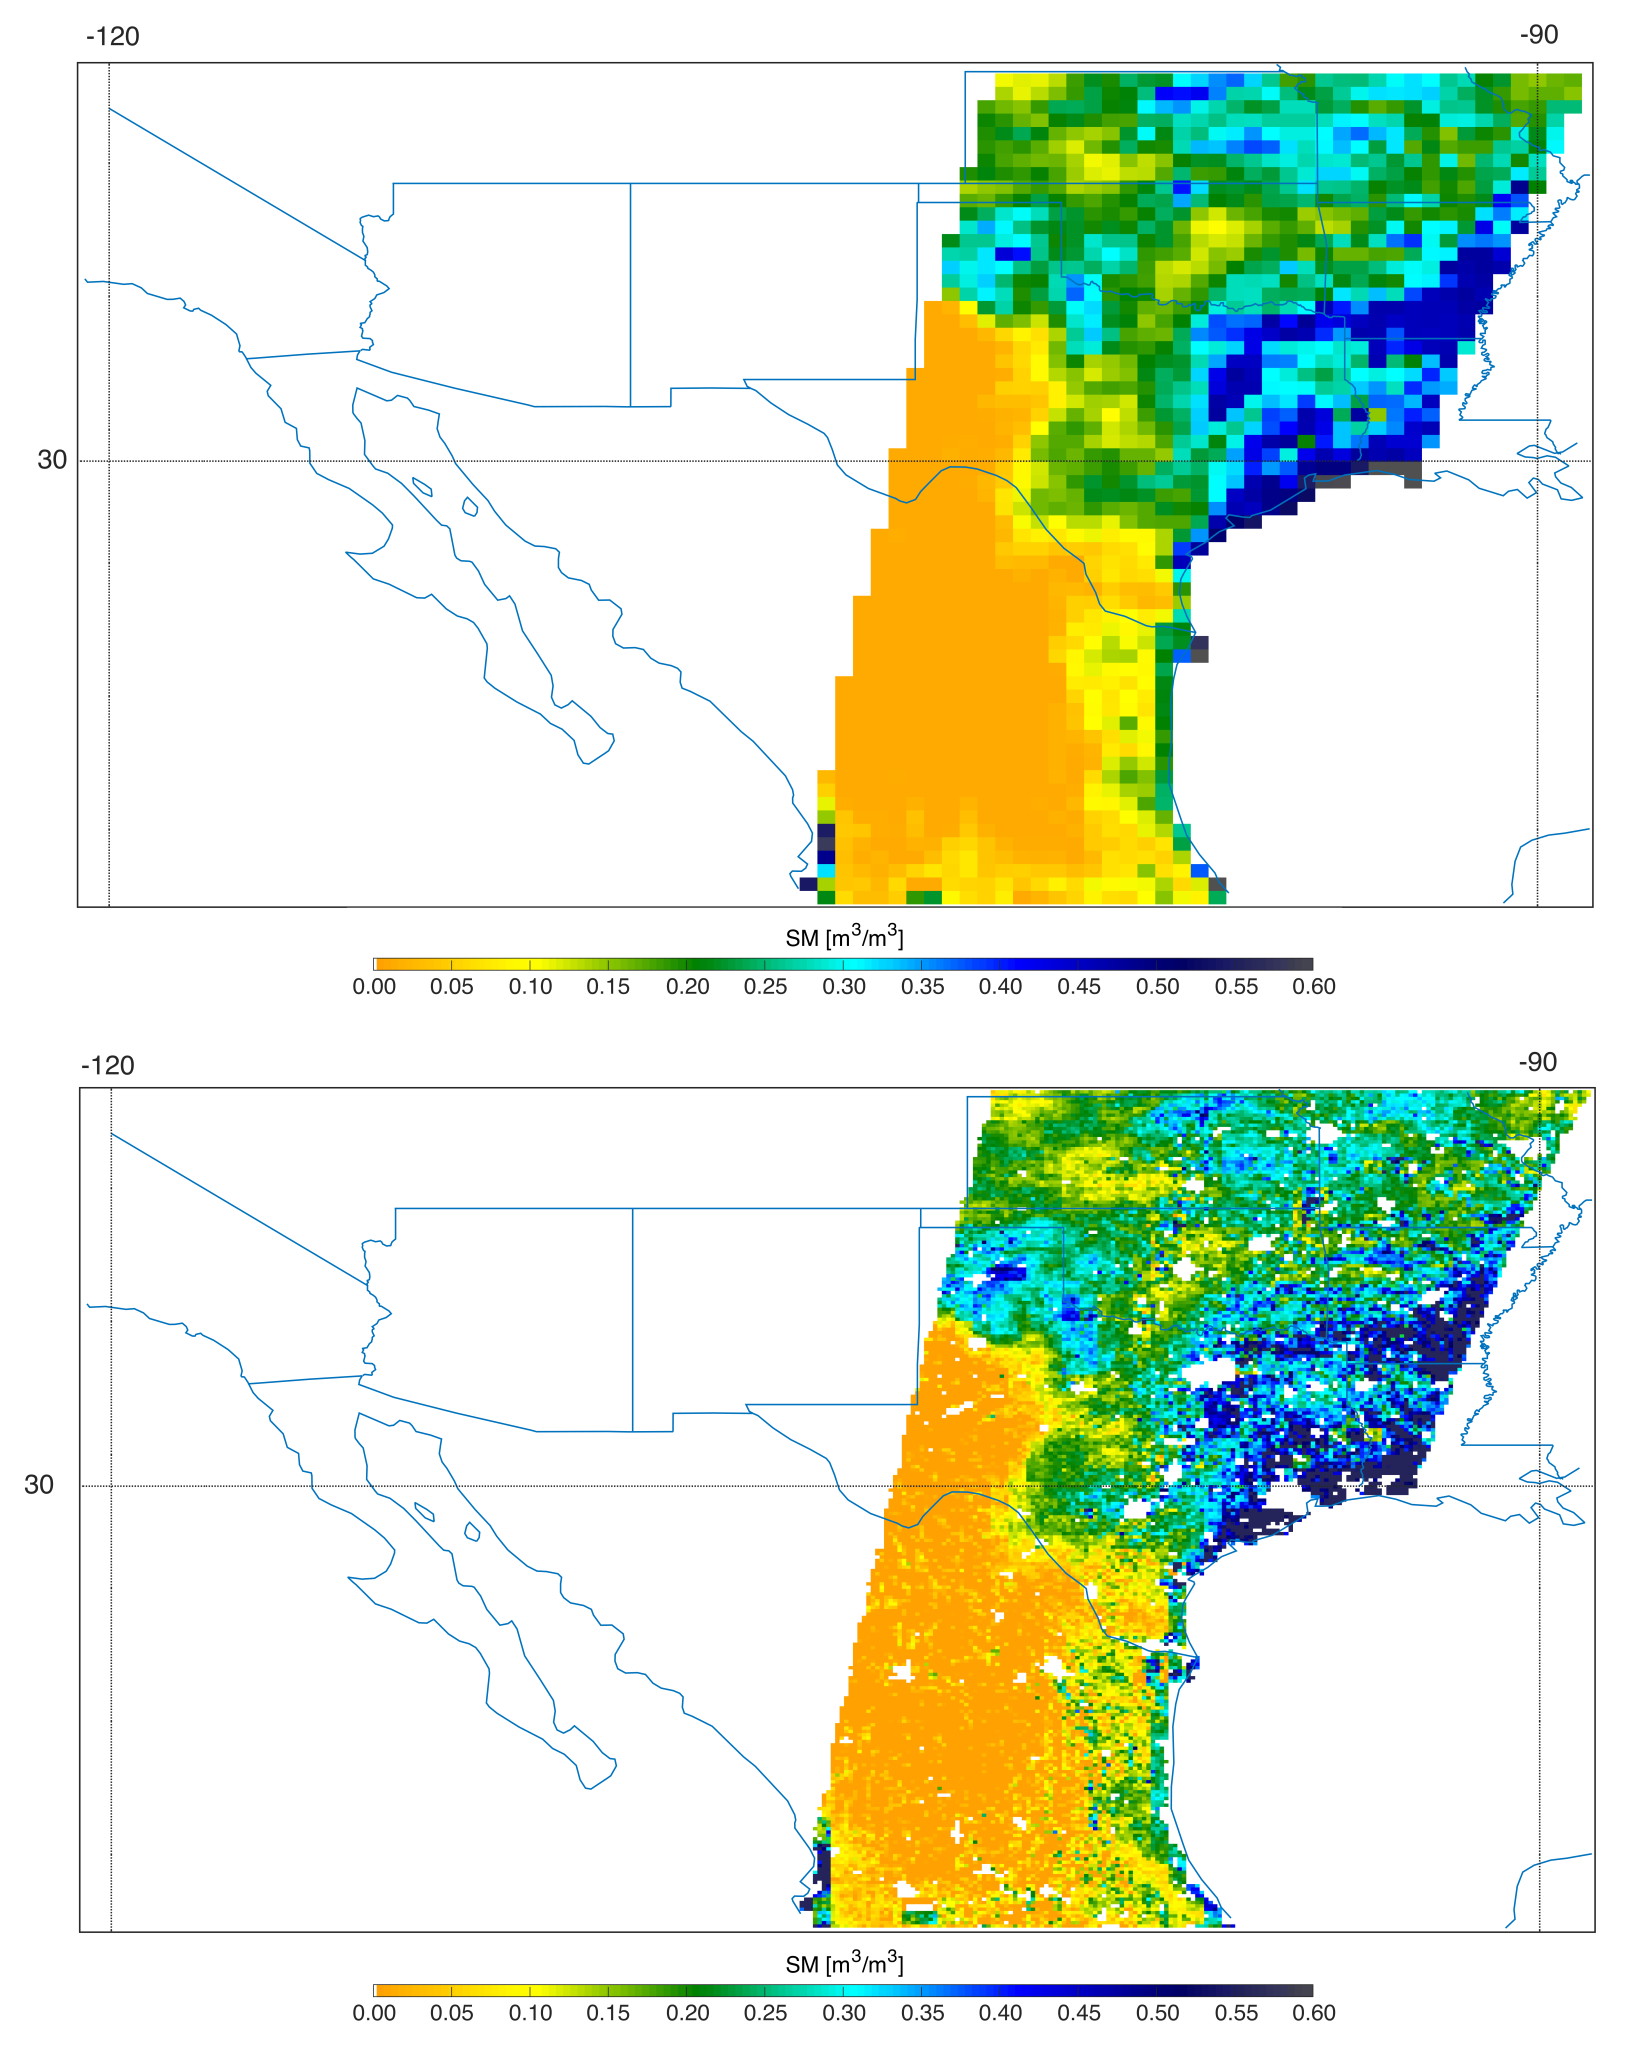 Southern U.S. SMAP soil moisture retrievals from April 27, 2015